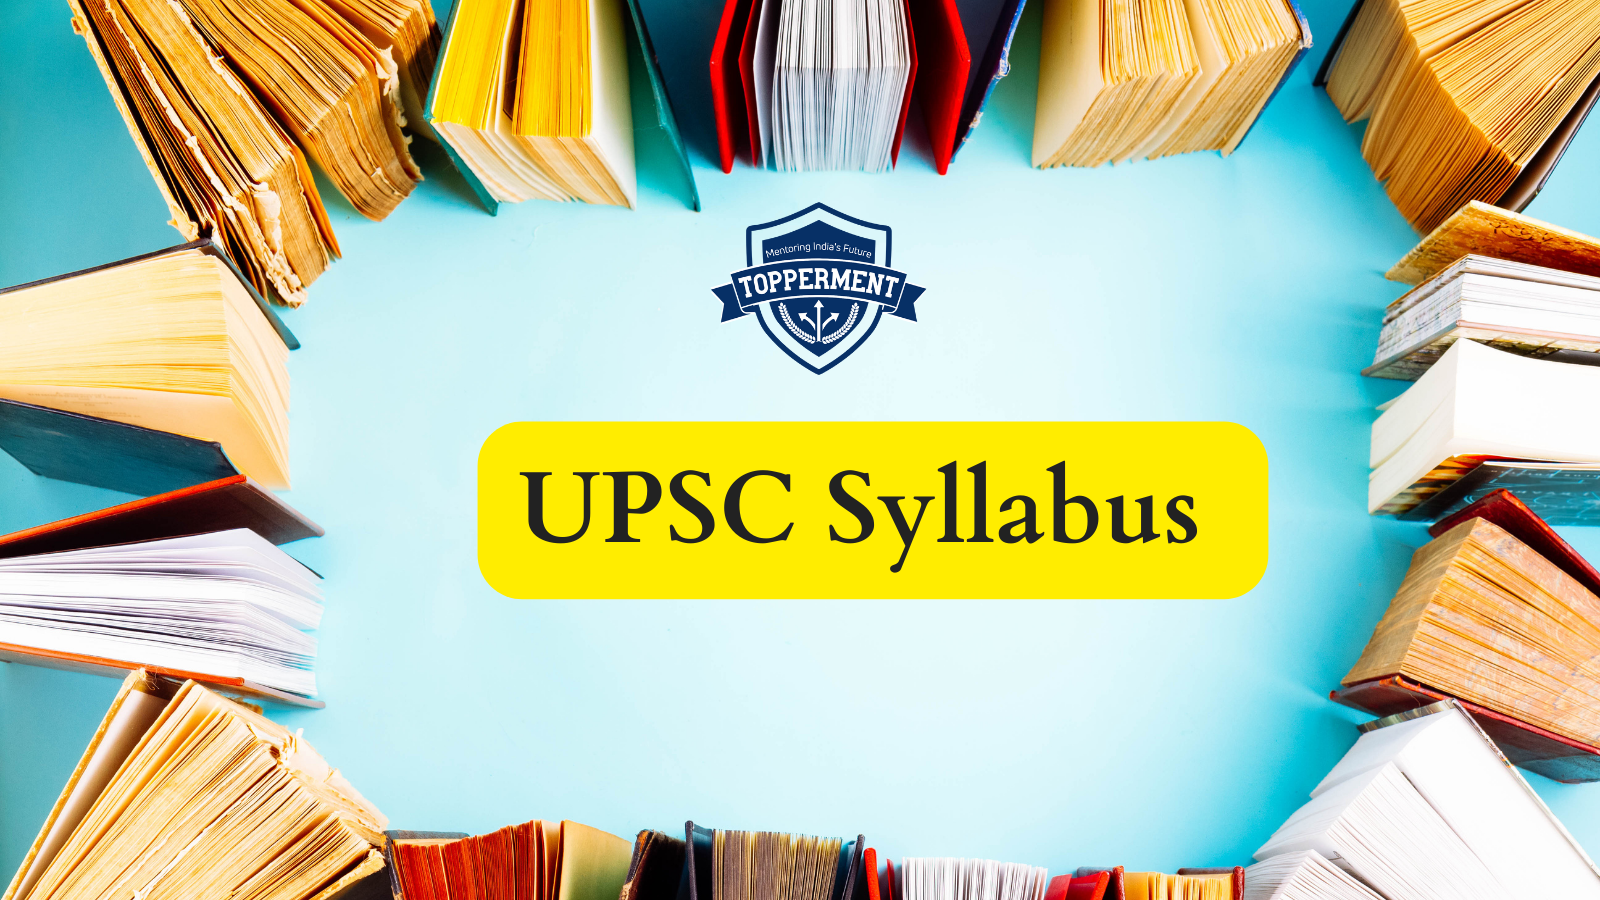 UPSC Syllabus -IAS-Civil Services-Mentorship-Guidance